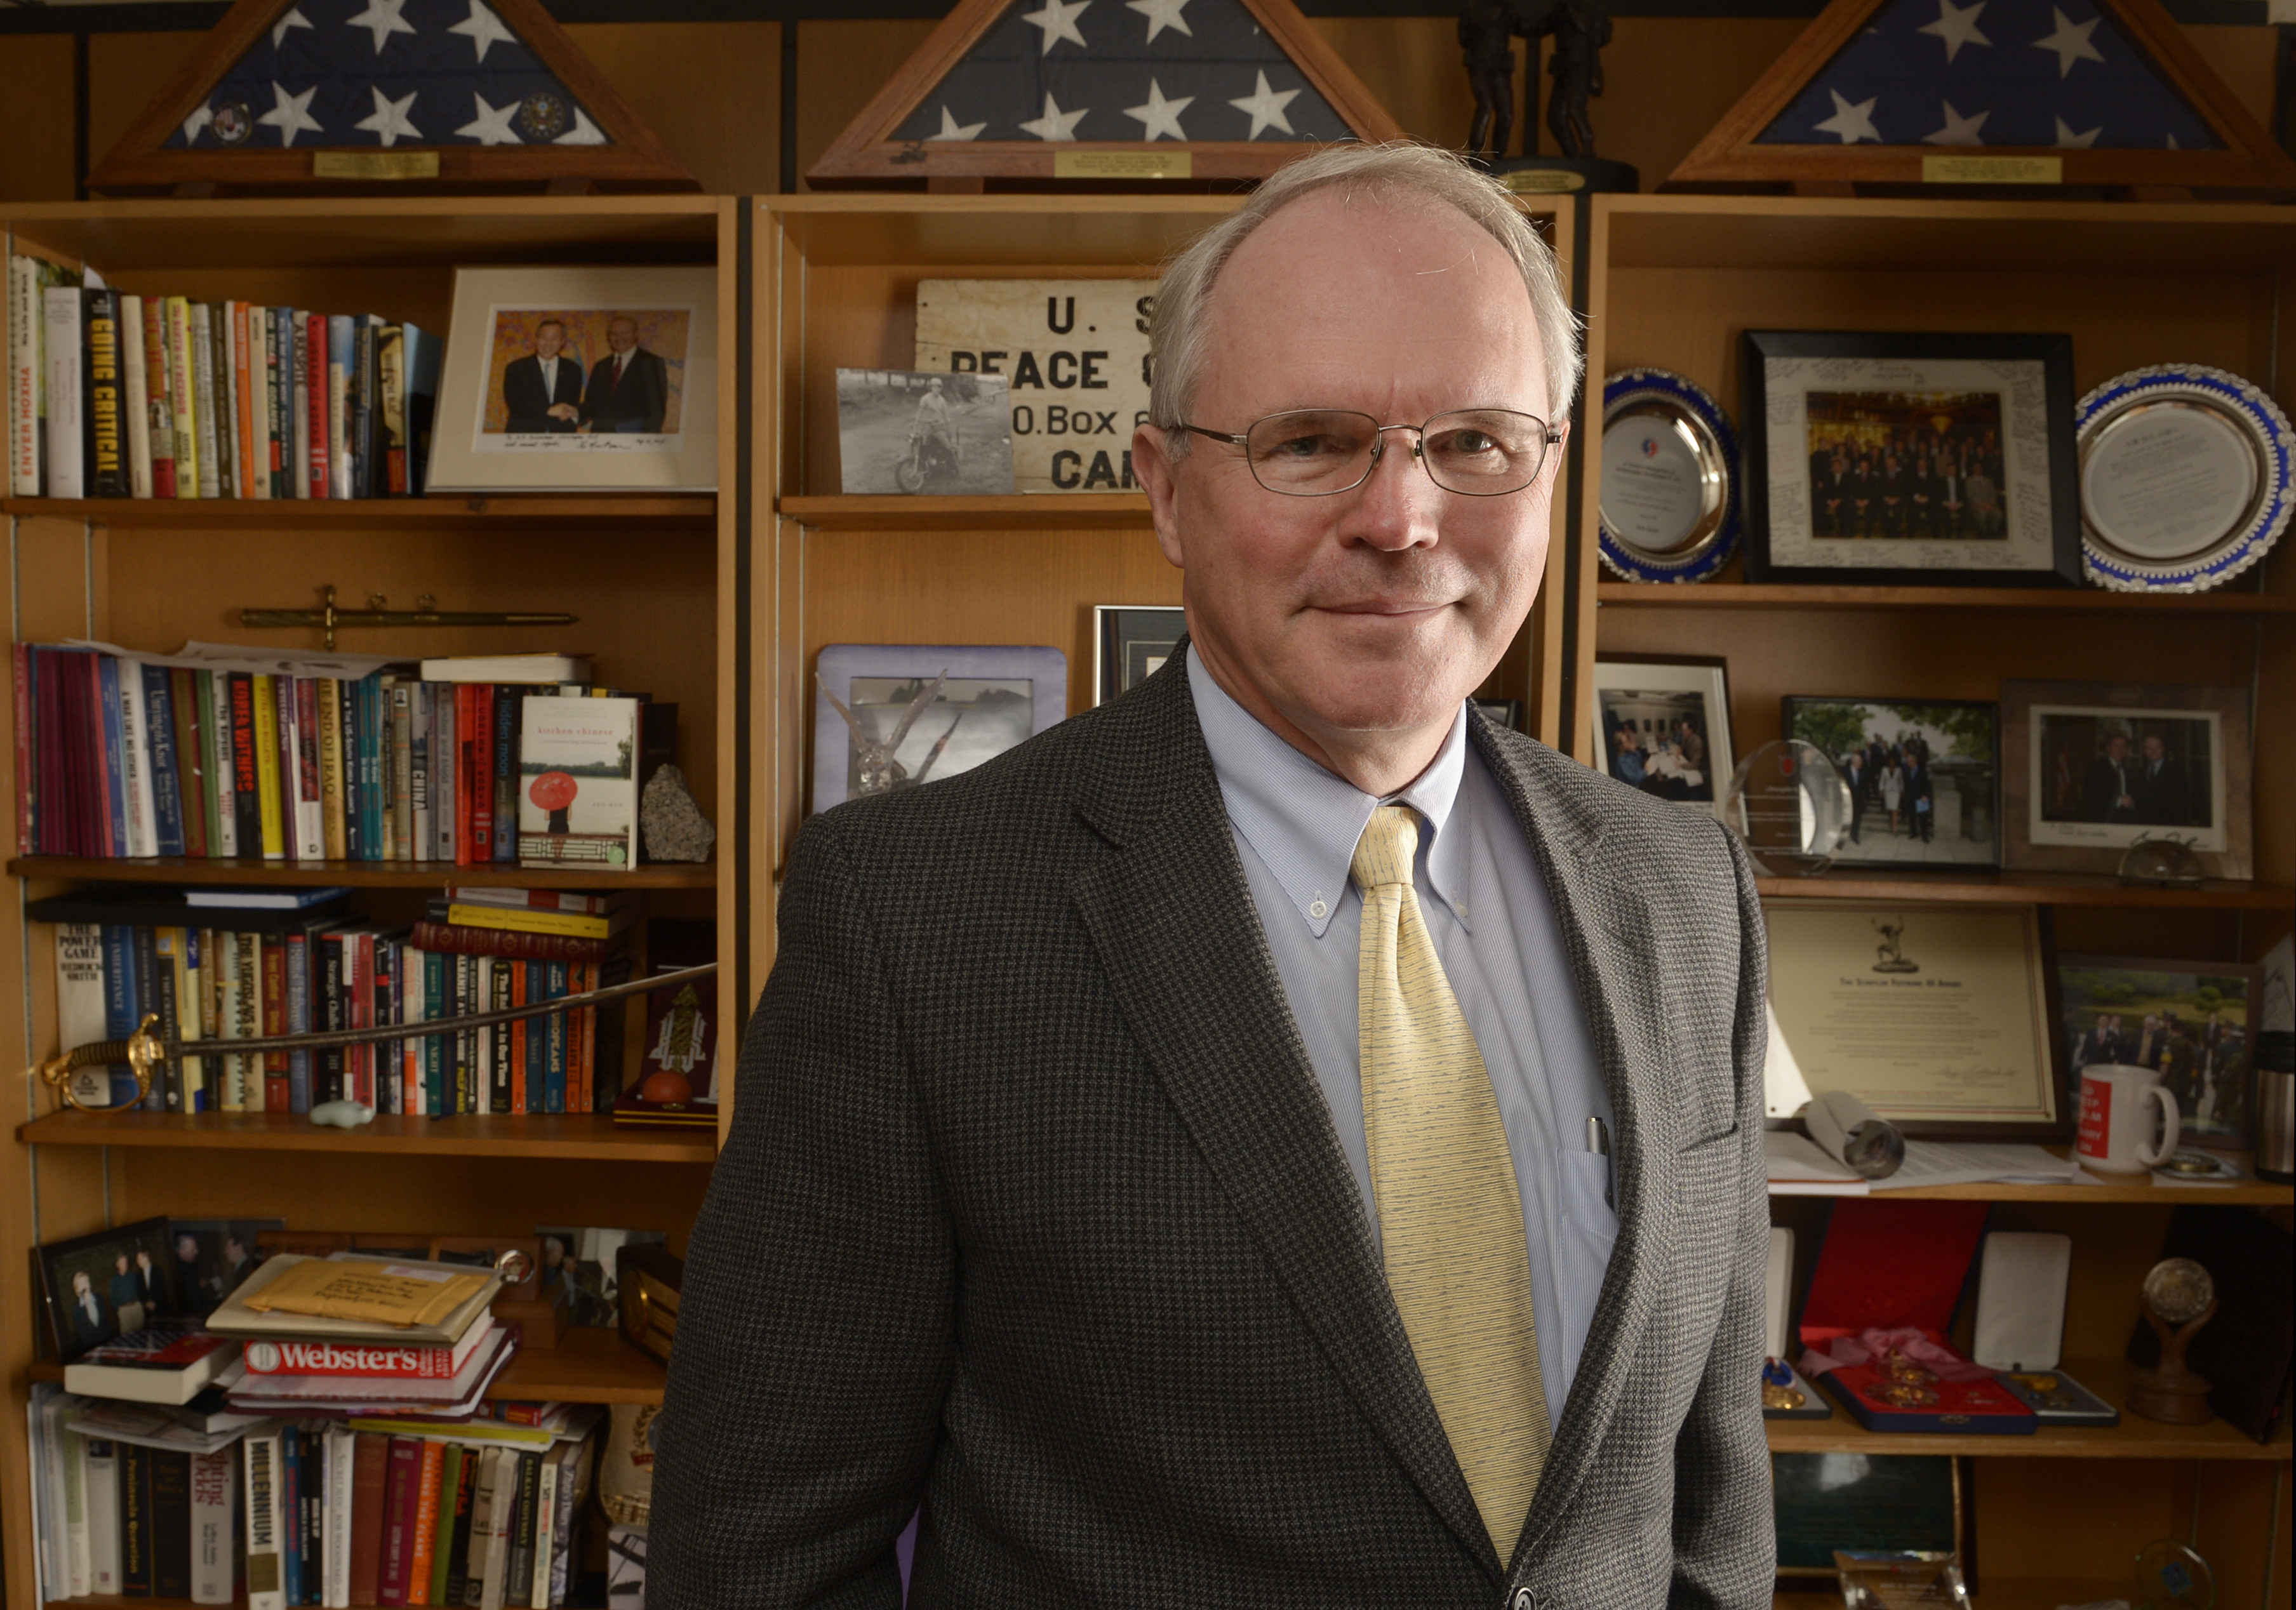 Christopher Hill, a former U.S. Ambassador to Korea, is seen at his office at the University of Denver on Jan. 8, 2013. (Helen H. Richardson&mdash;Denver Post/Getty Images)